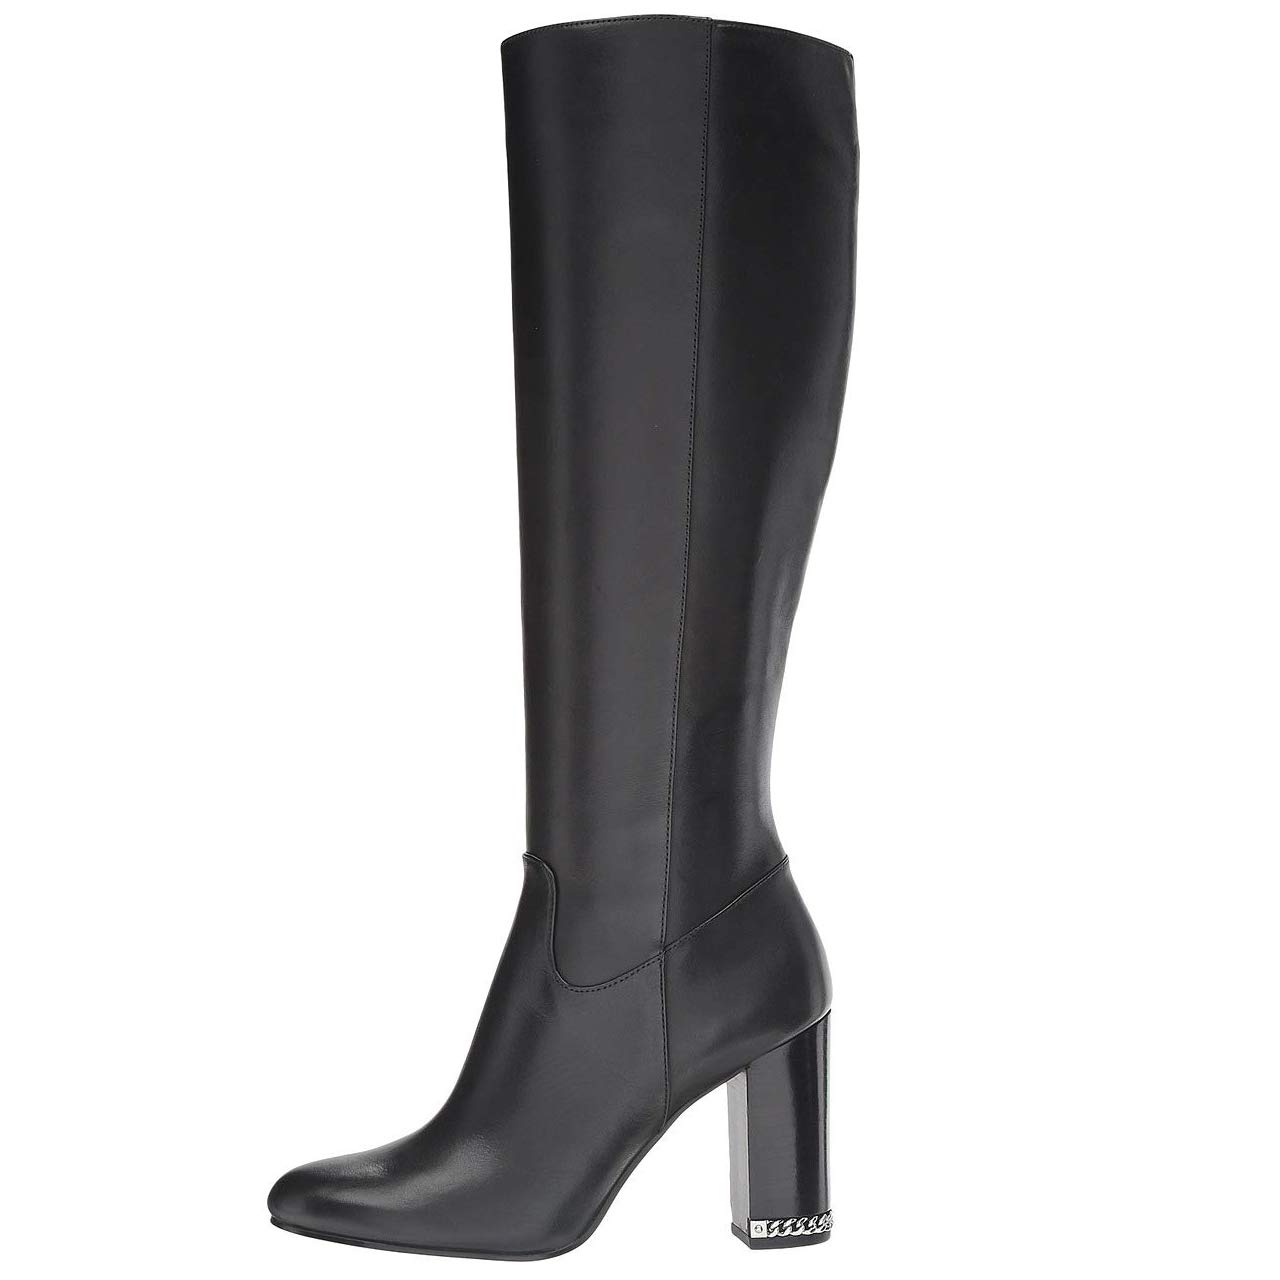 Michael Kors Womens Walker Leather Almond Toe Knee High Fashion, Black, Size 9.5 - image 4 of 6